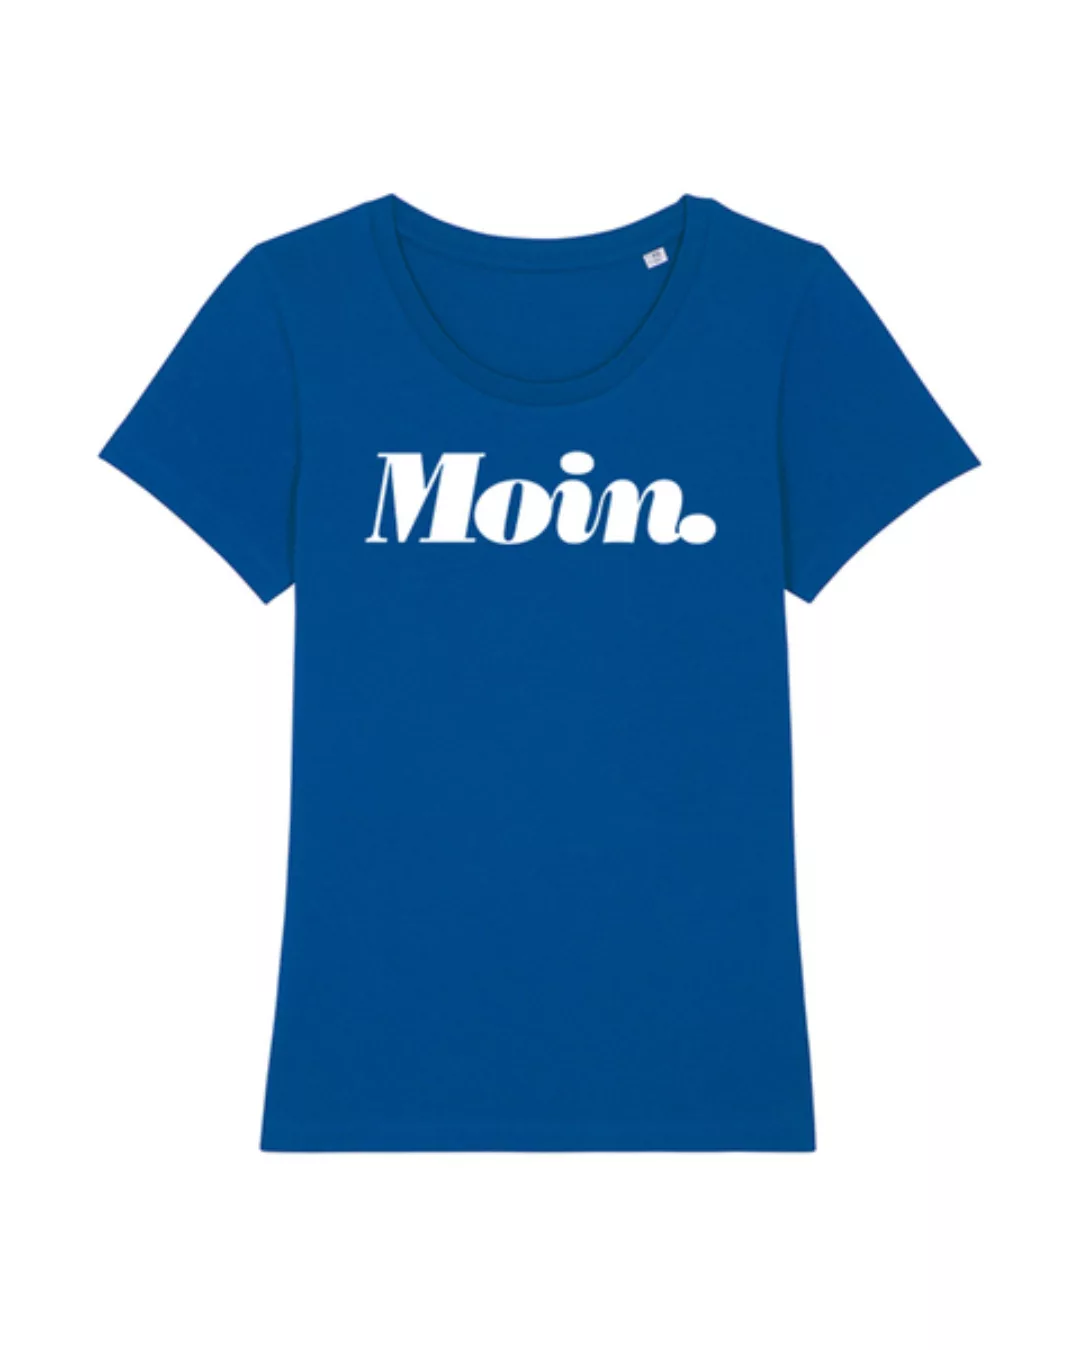 Moin 2020 | T-shirt Damen günstig online kaufen